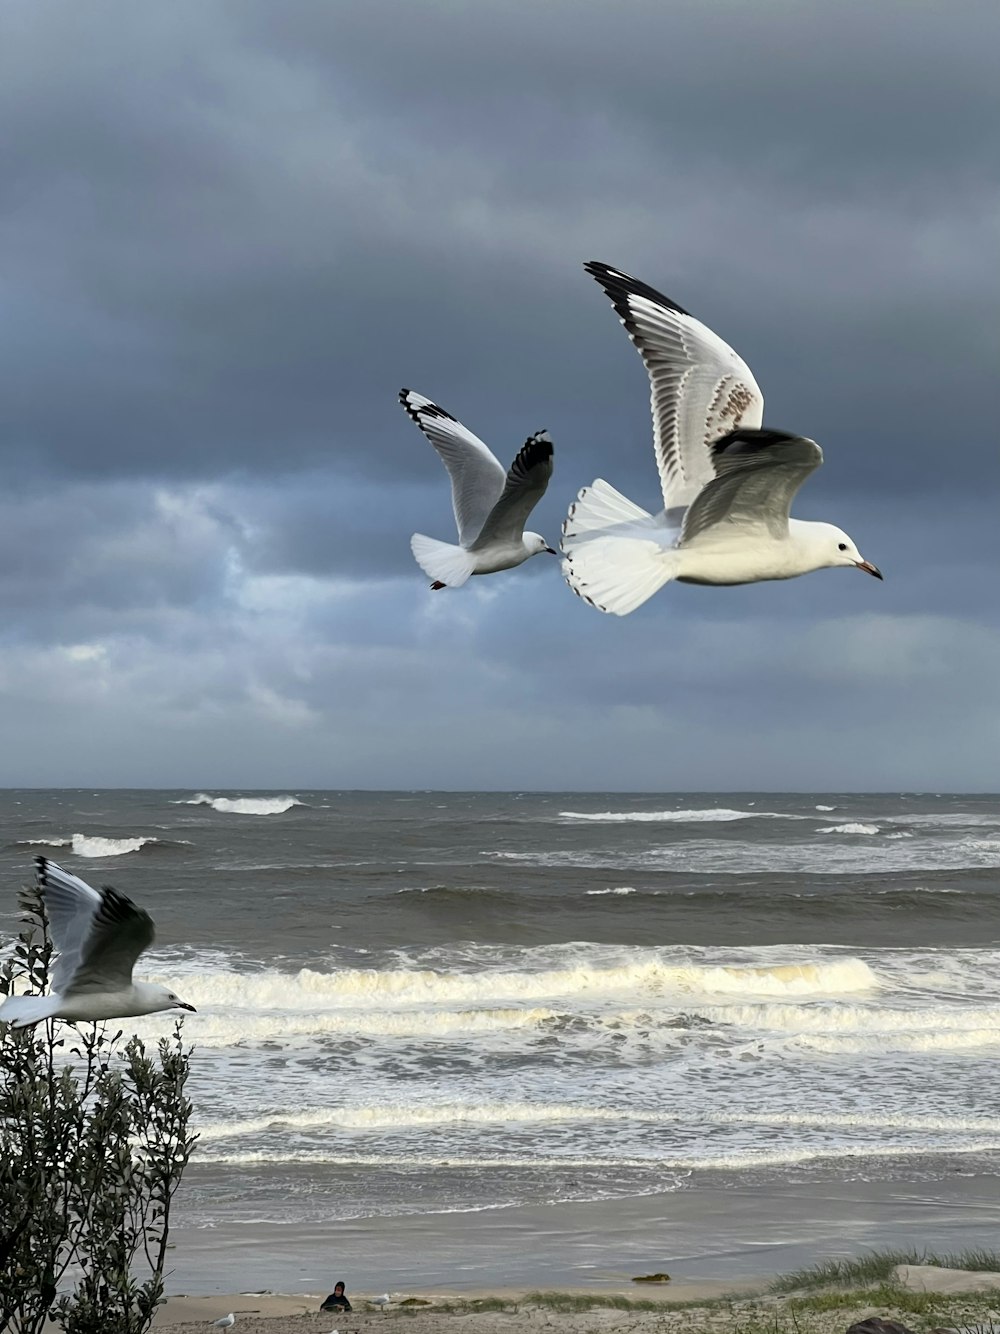 a couple of birds flying over a beach next to the ocean